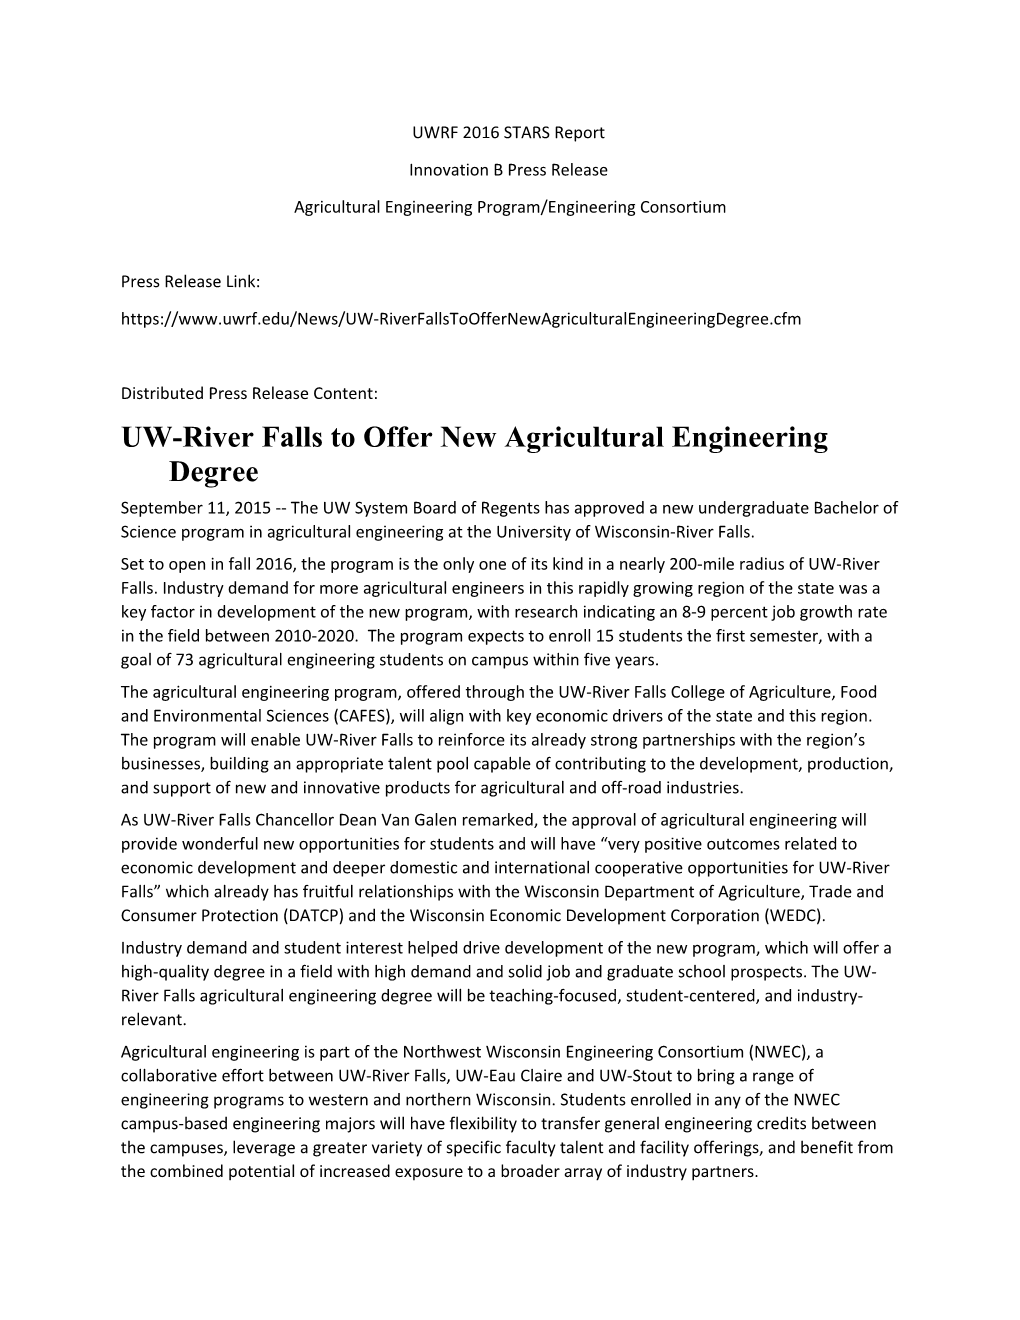 Agricultural Engineering Program/Engineering Consortium